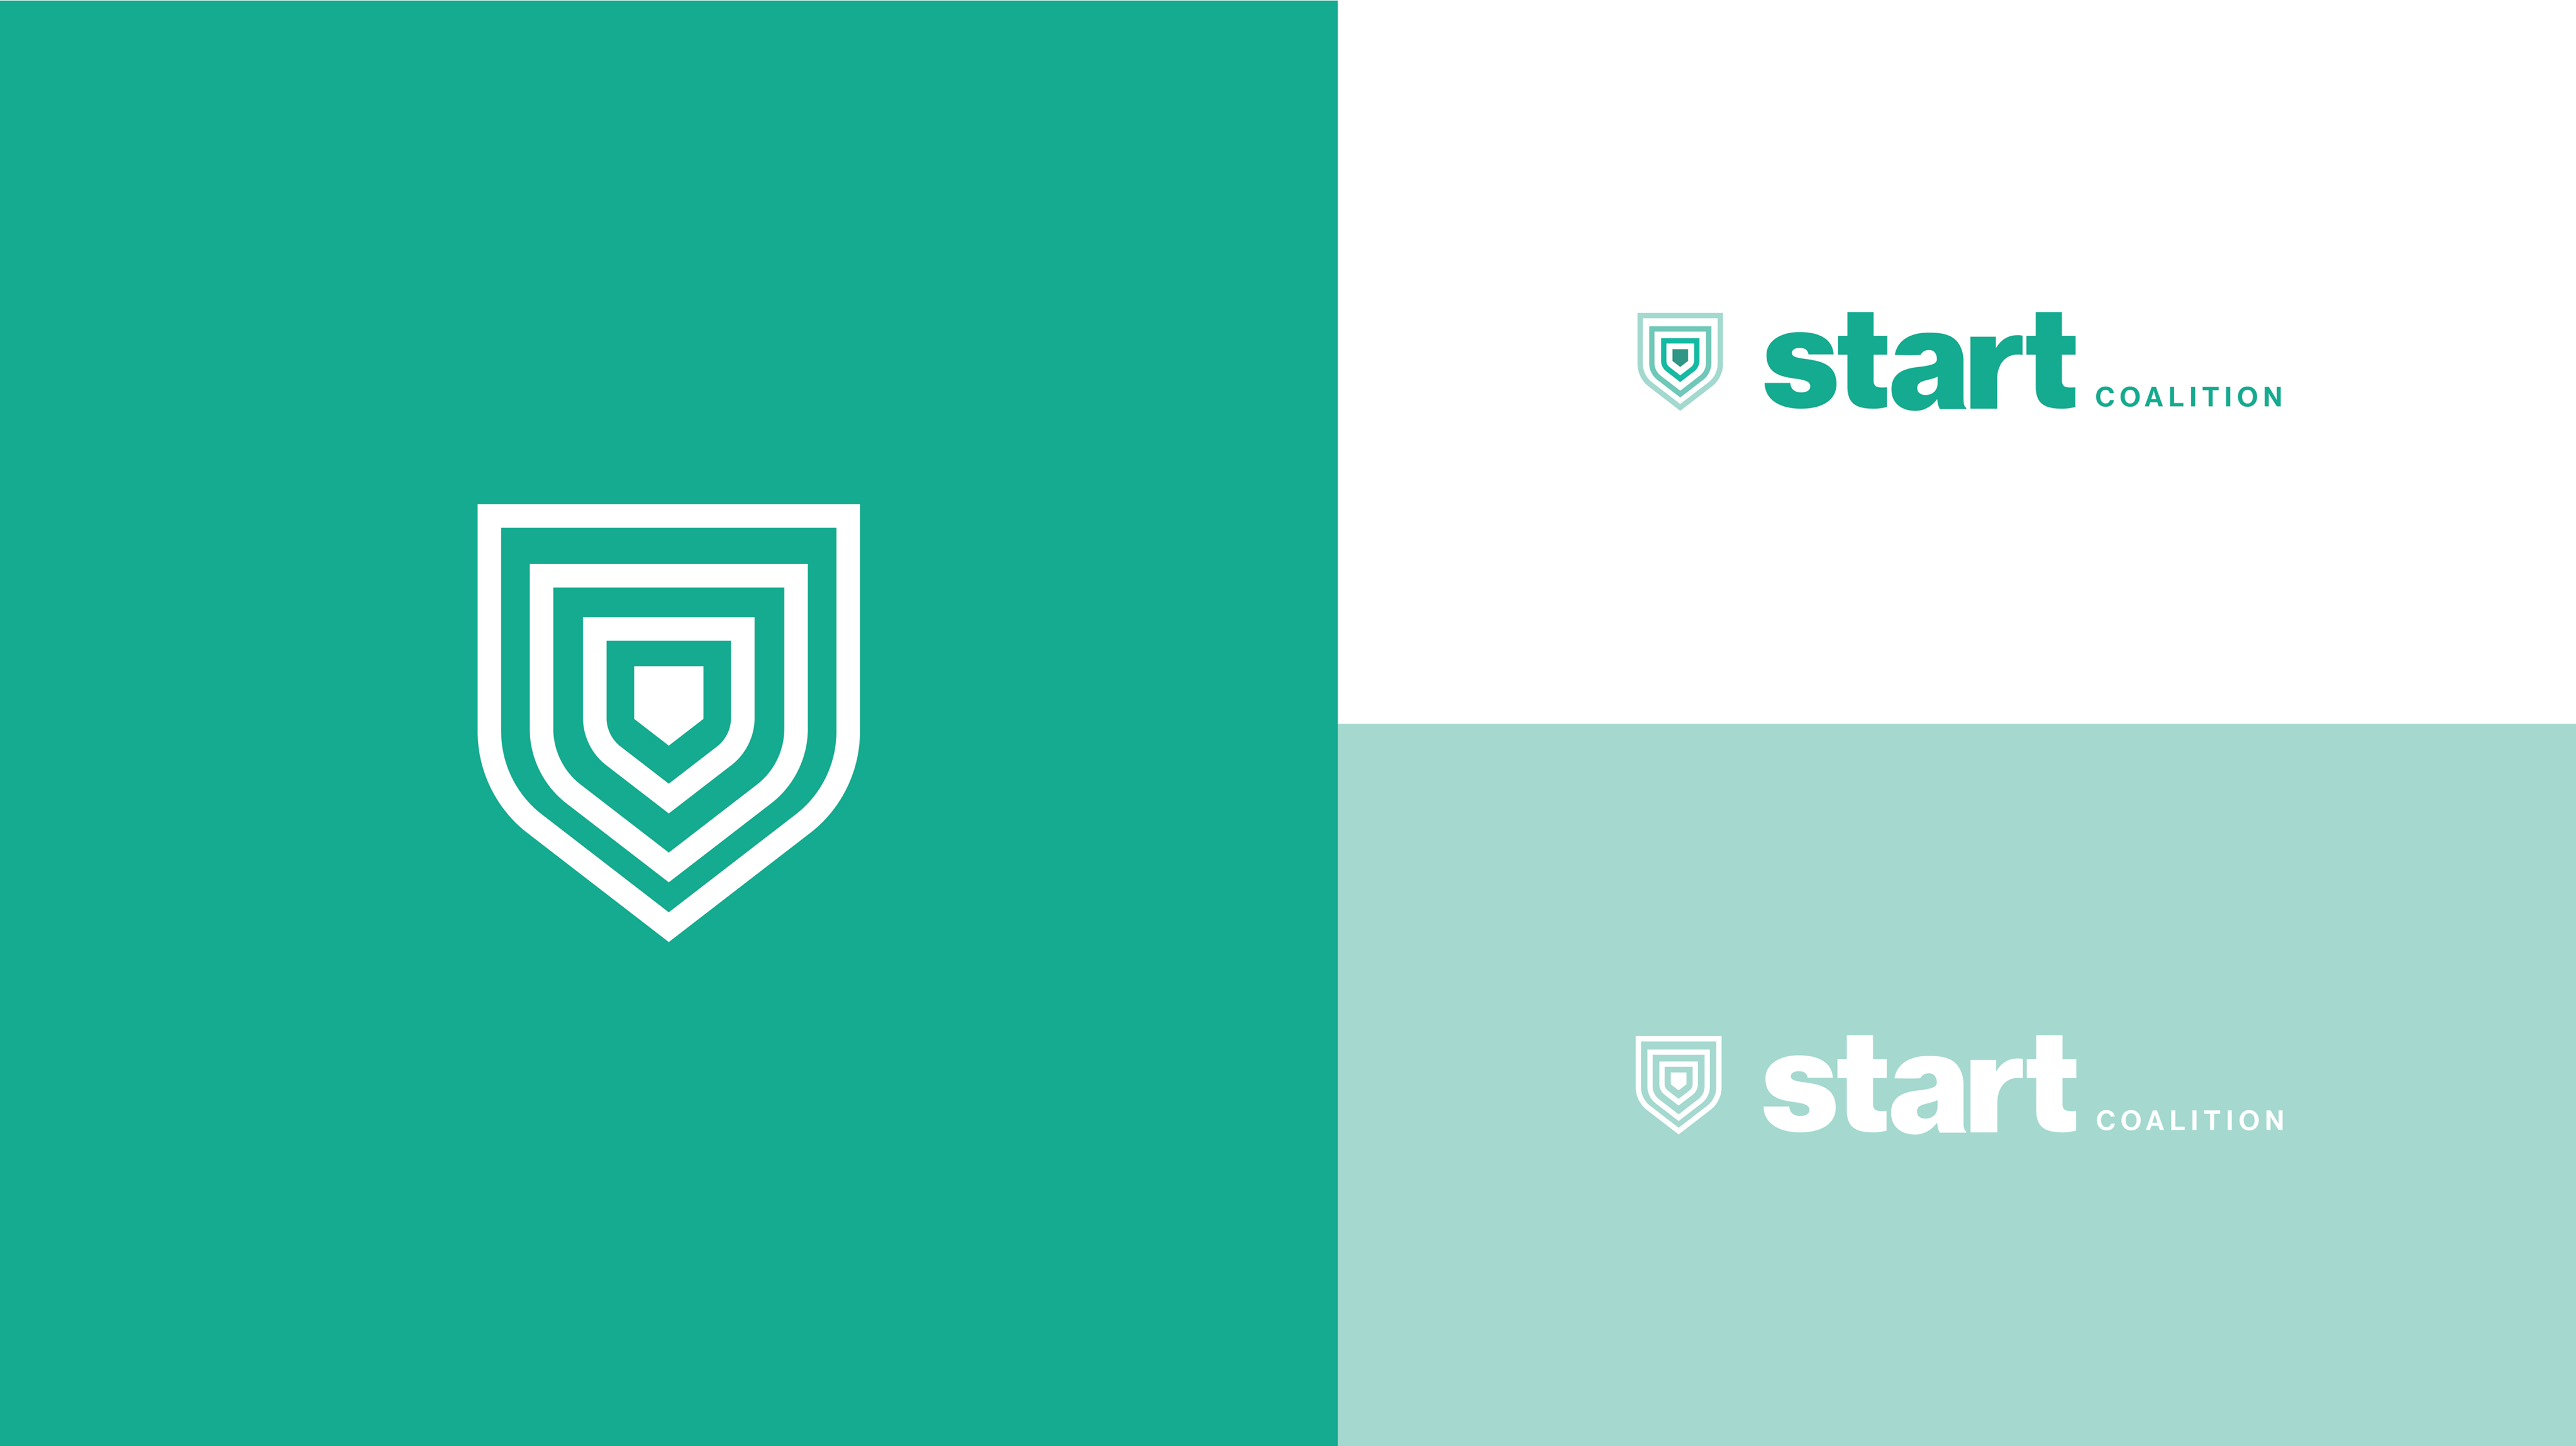 Start Coalition Logos